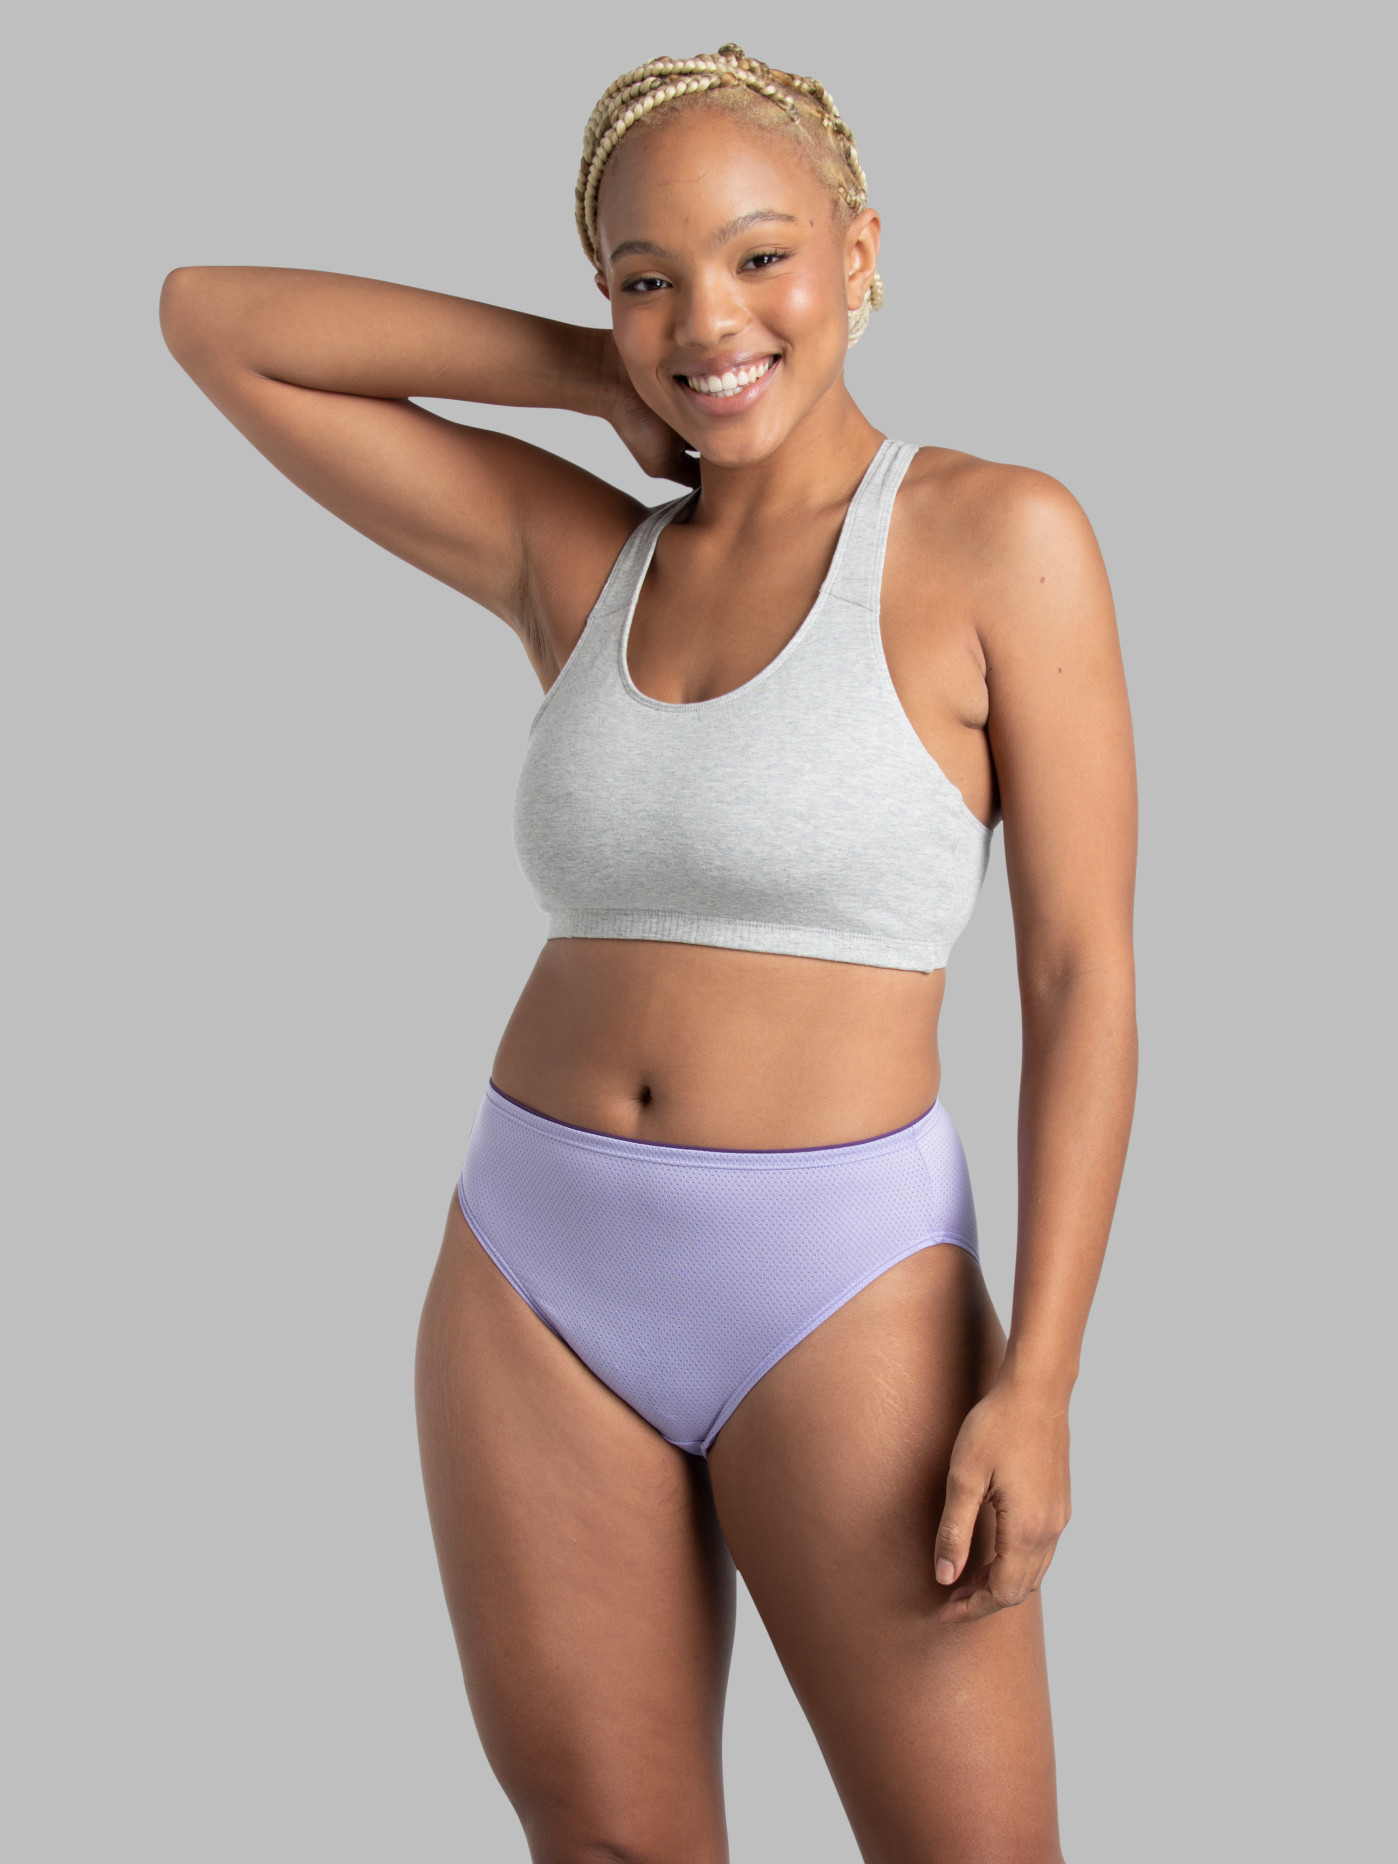 Women's underpants in bikini cut made of cotton, 4-pack 3XL 